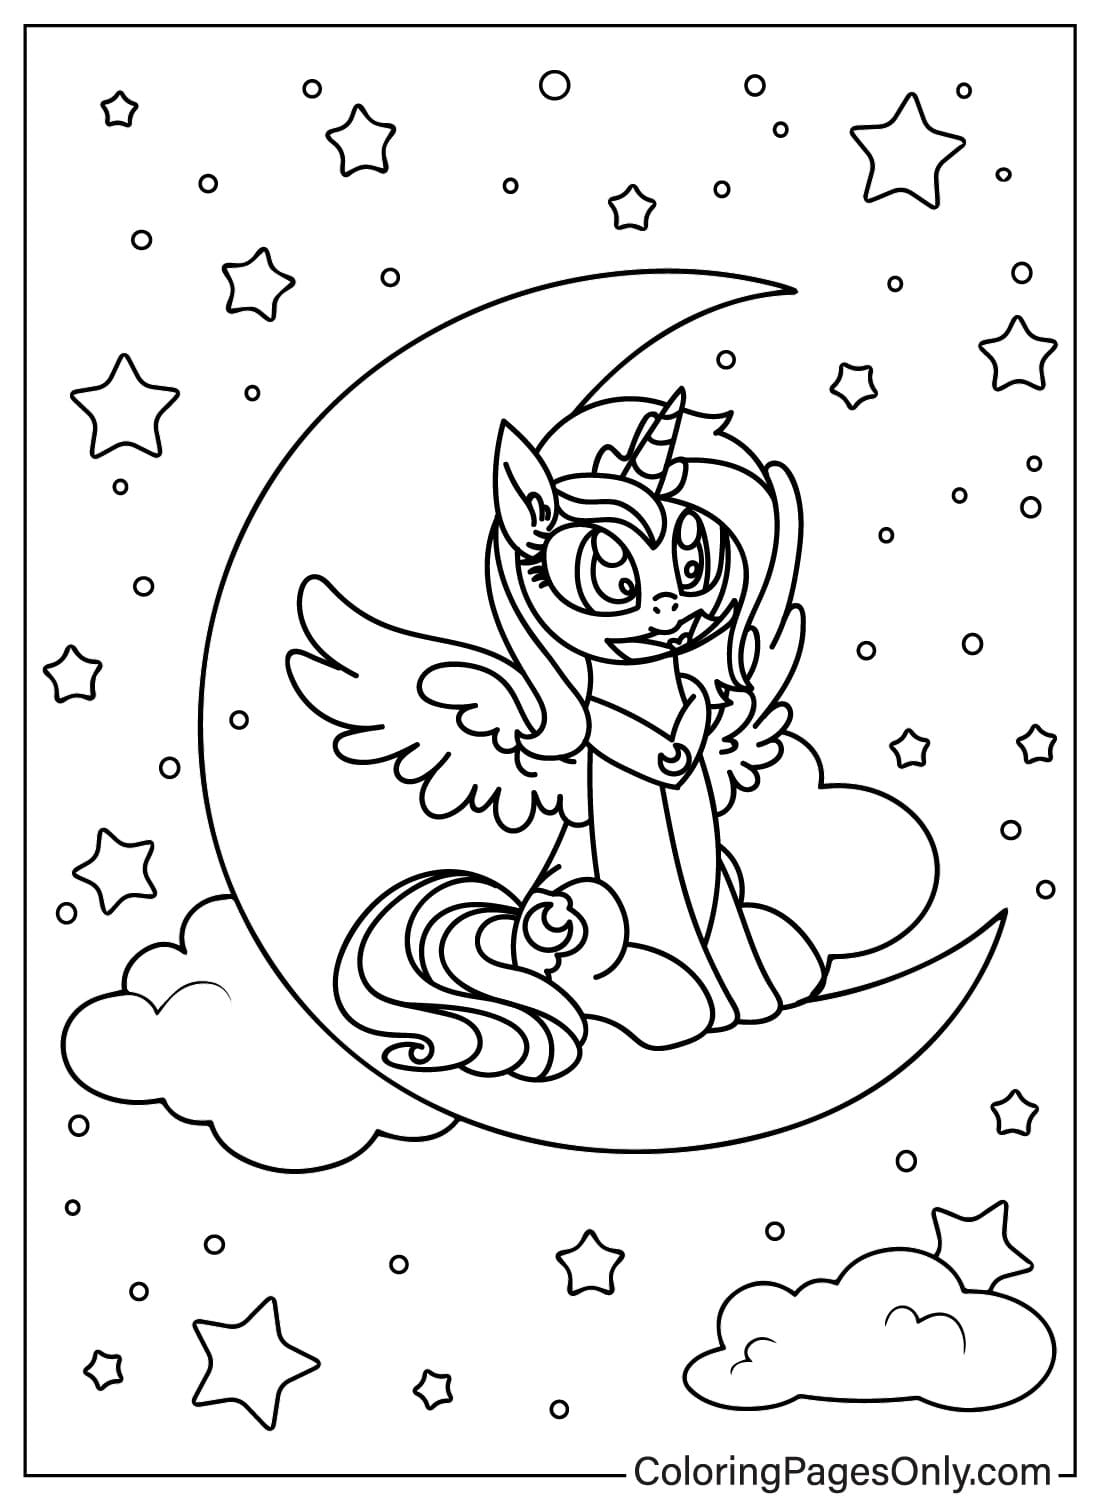 Coloriage Princesse Luna assise sur la lune de Princess Luna